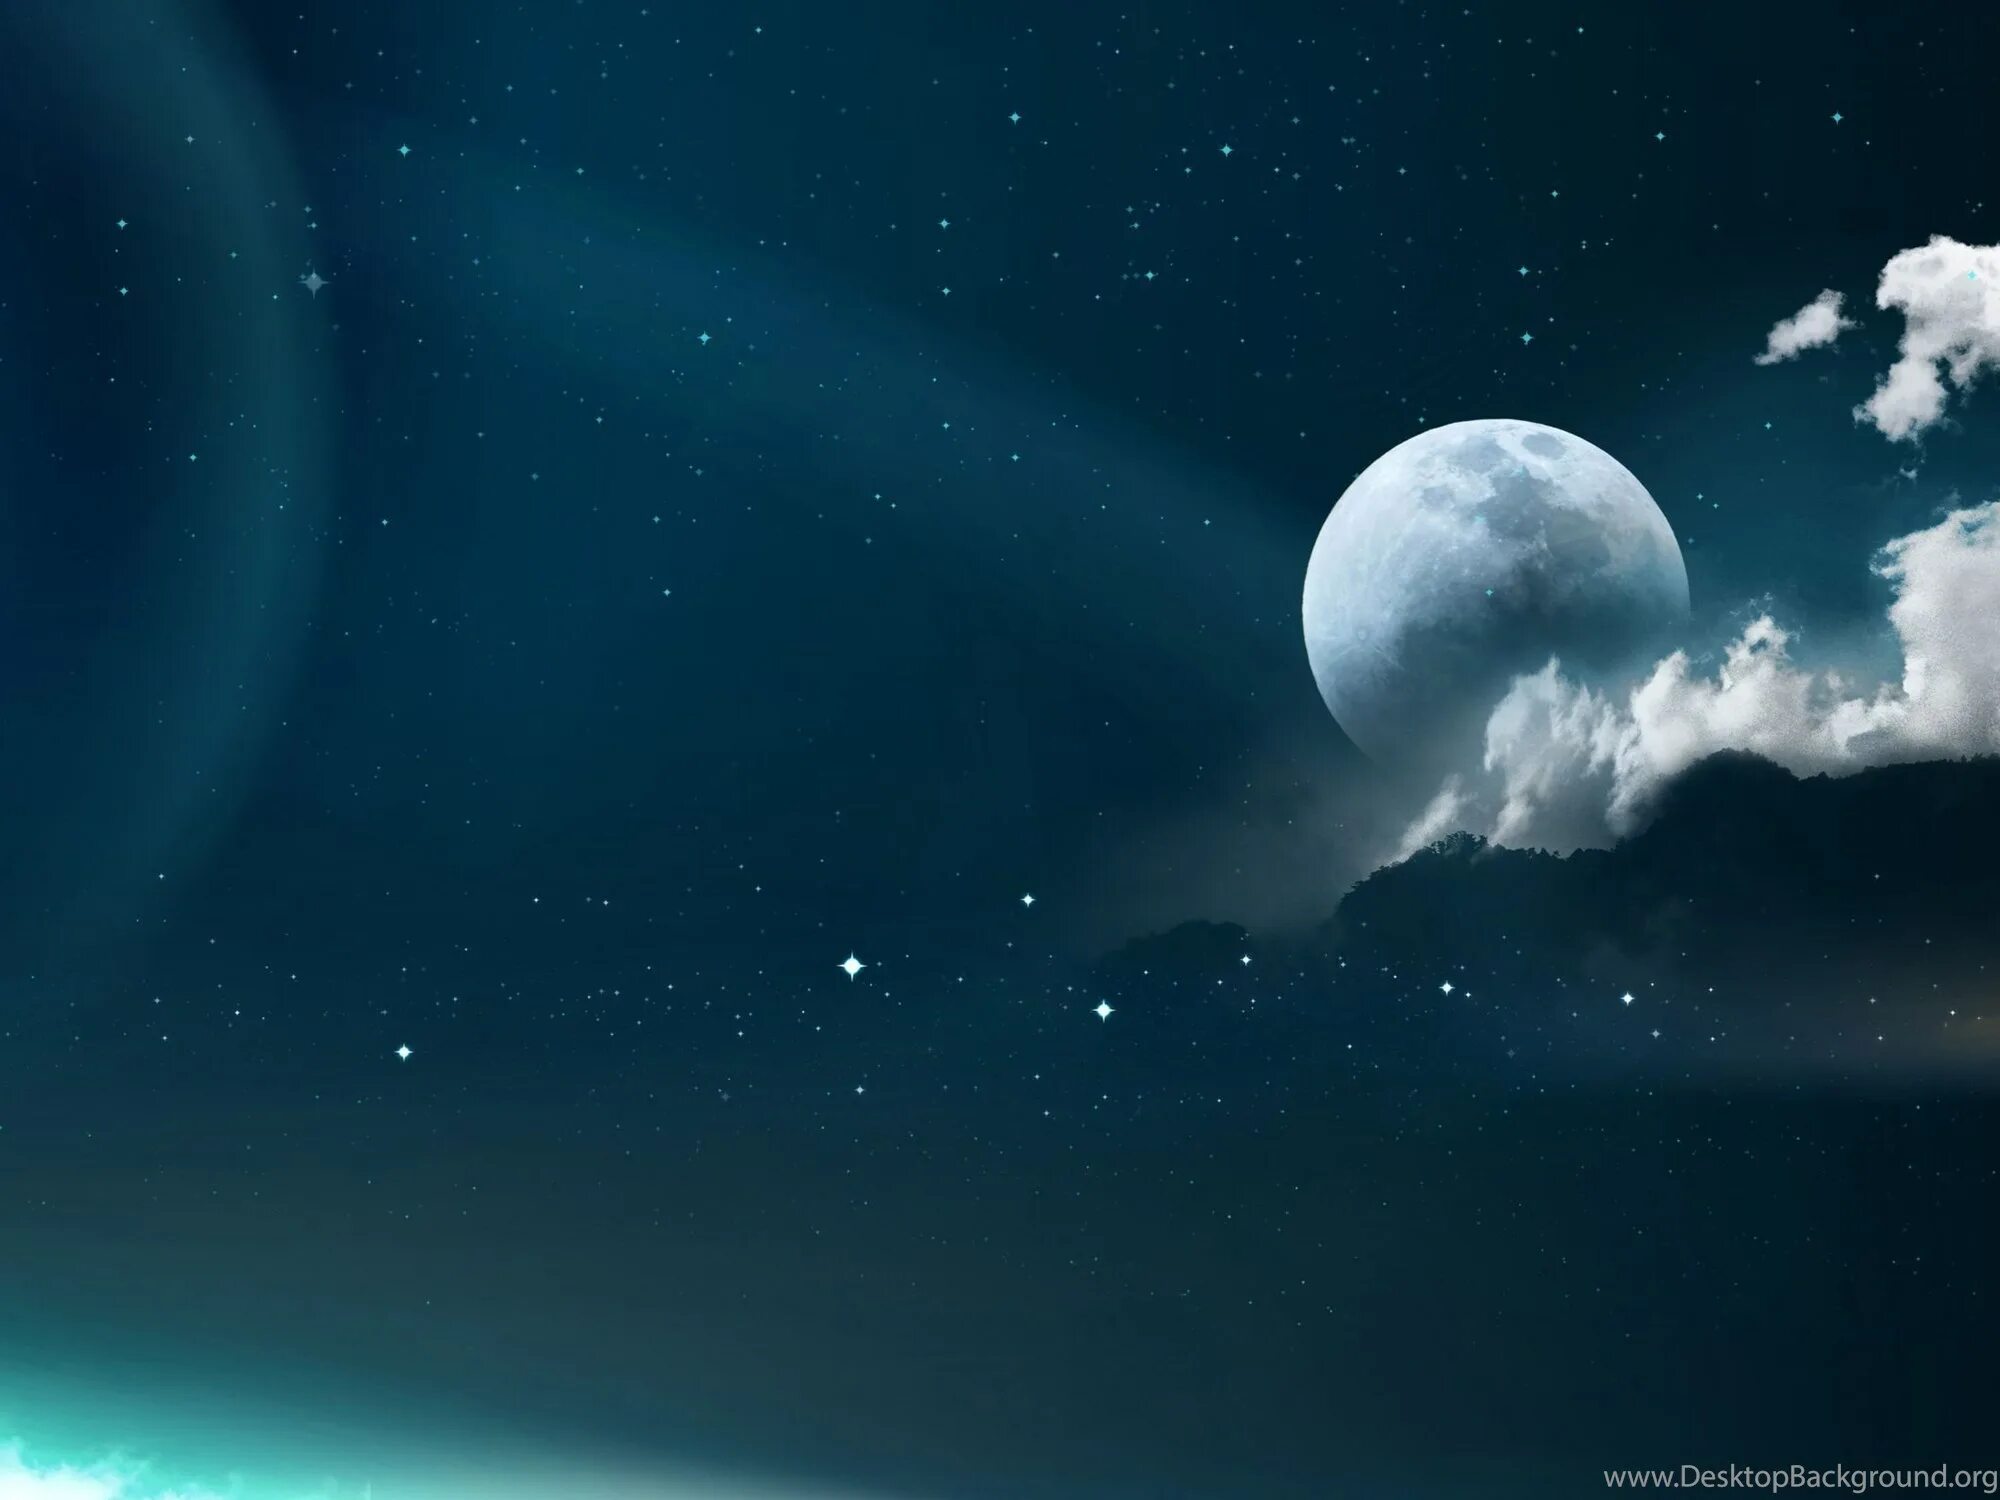 Lunar star. Ночное небо с луной. Лунное небо. Звездное небо с луной. Луна на небе.